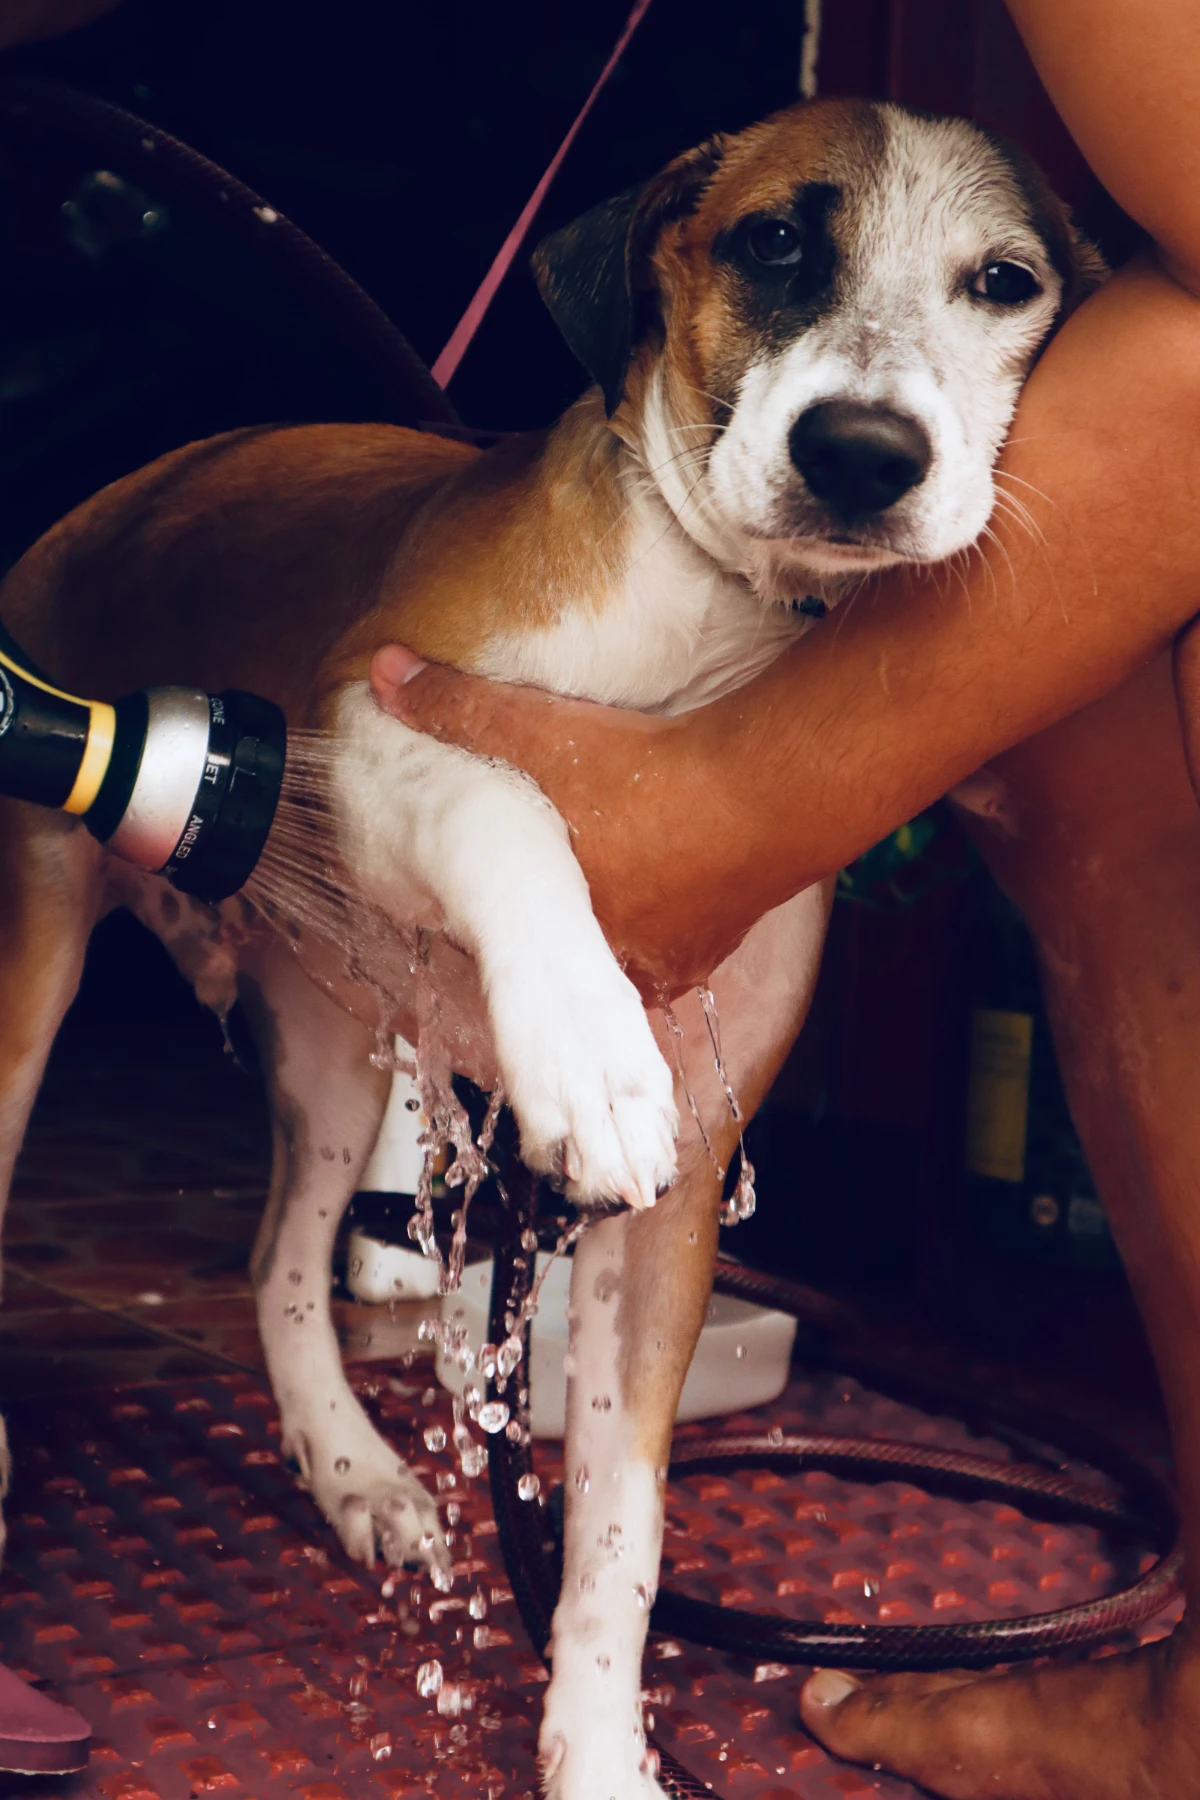 dog getting paw washed